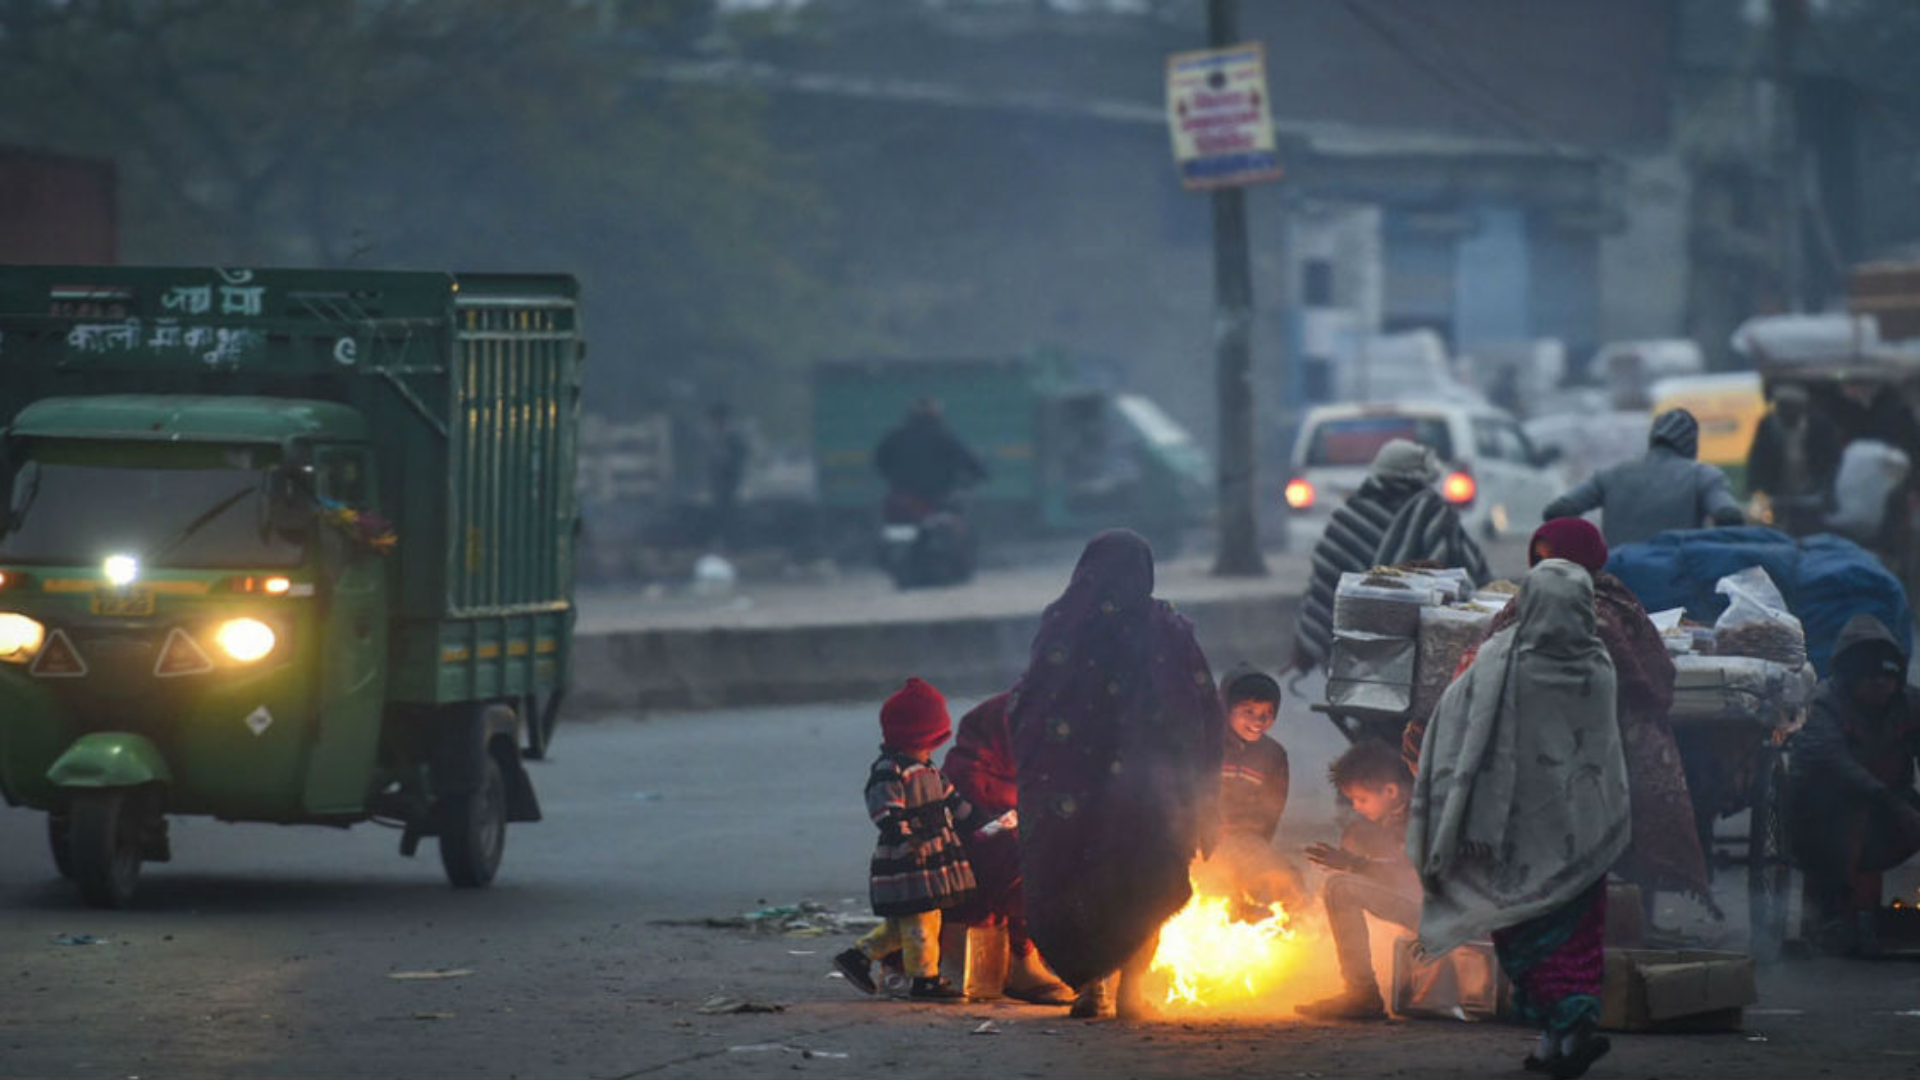 Delhi Freezes at Season’s Lowest Temperature, Disrupting Transportation